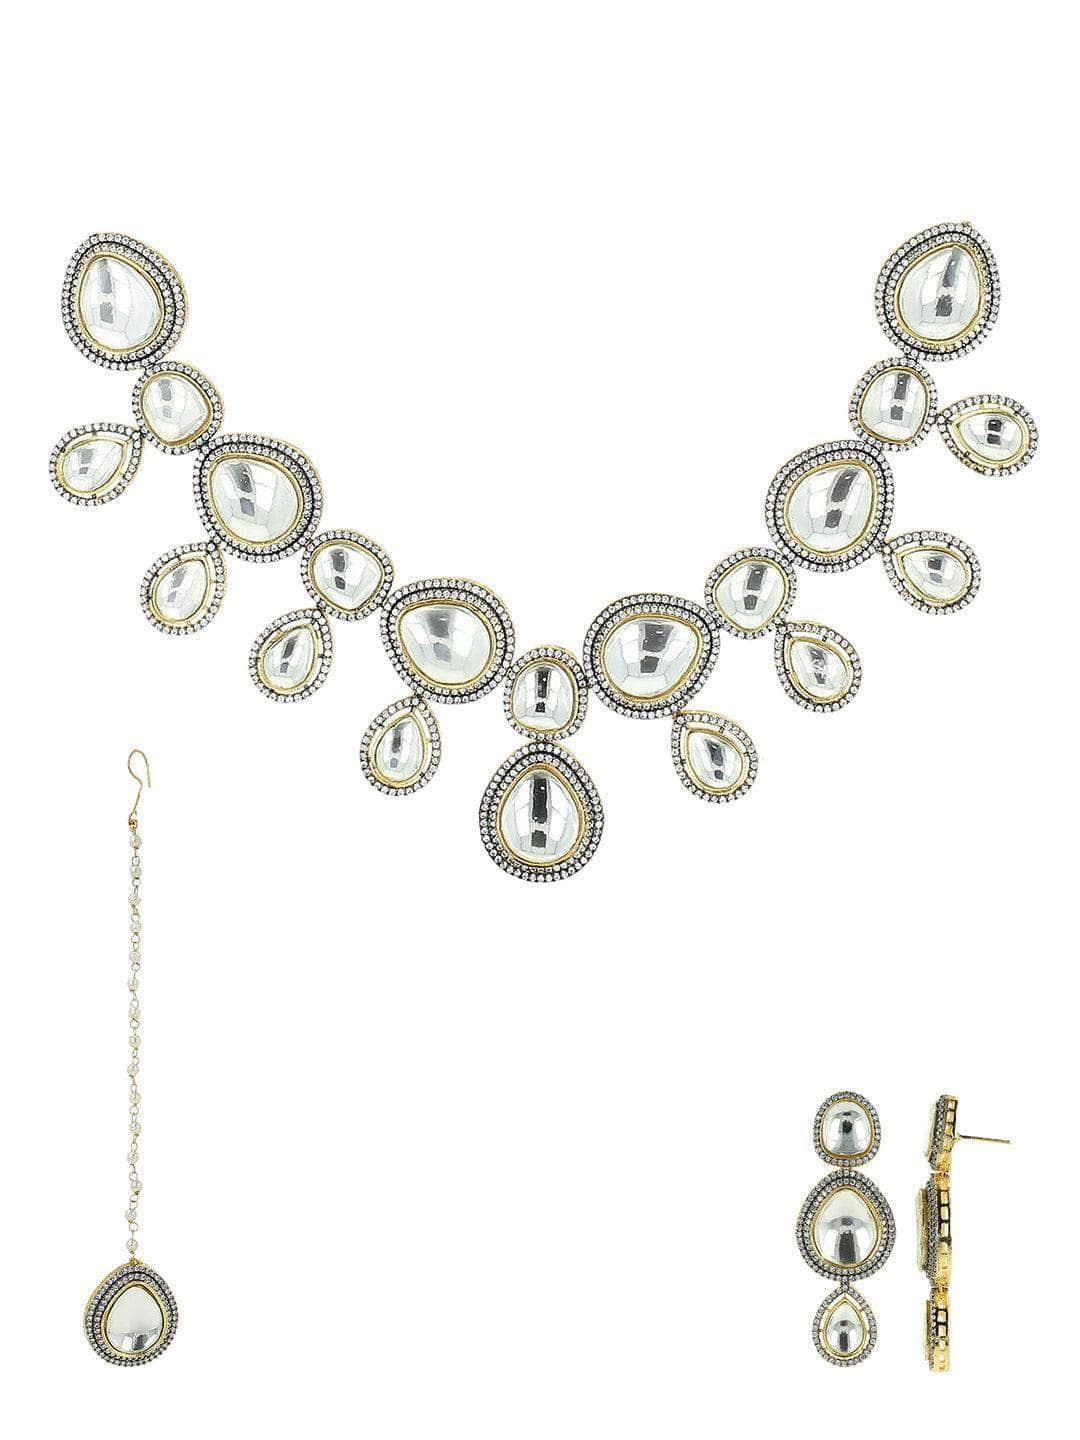 Ishhaara Victorian AD polki kundan necklace set